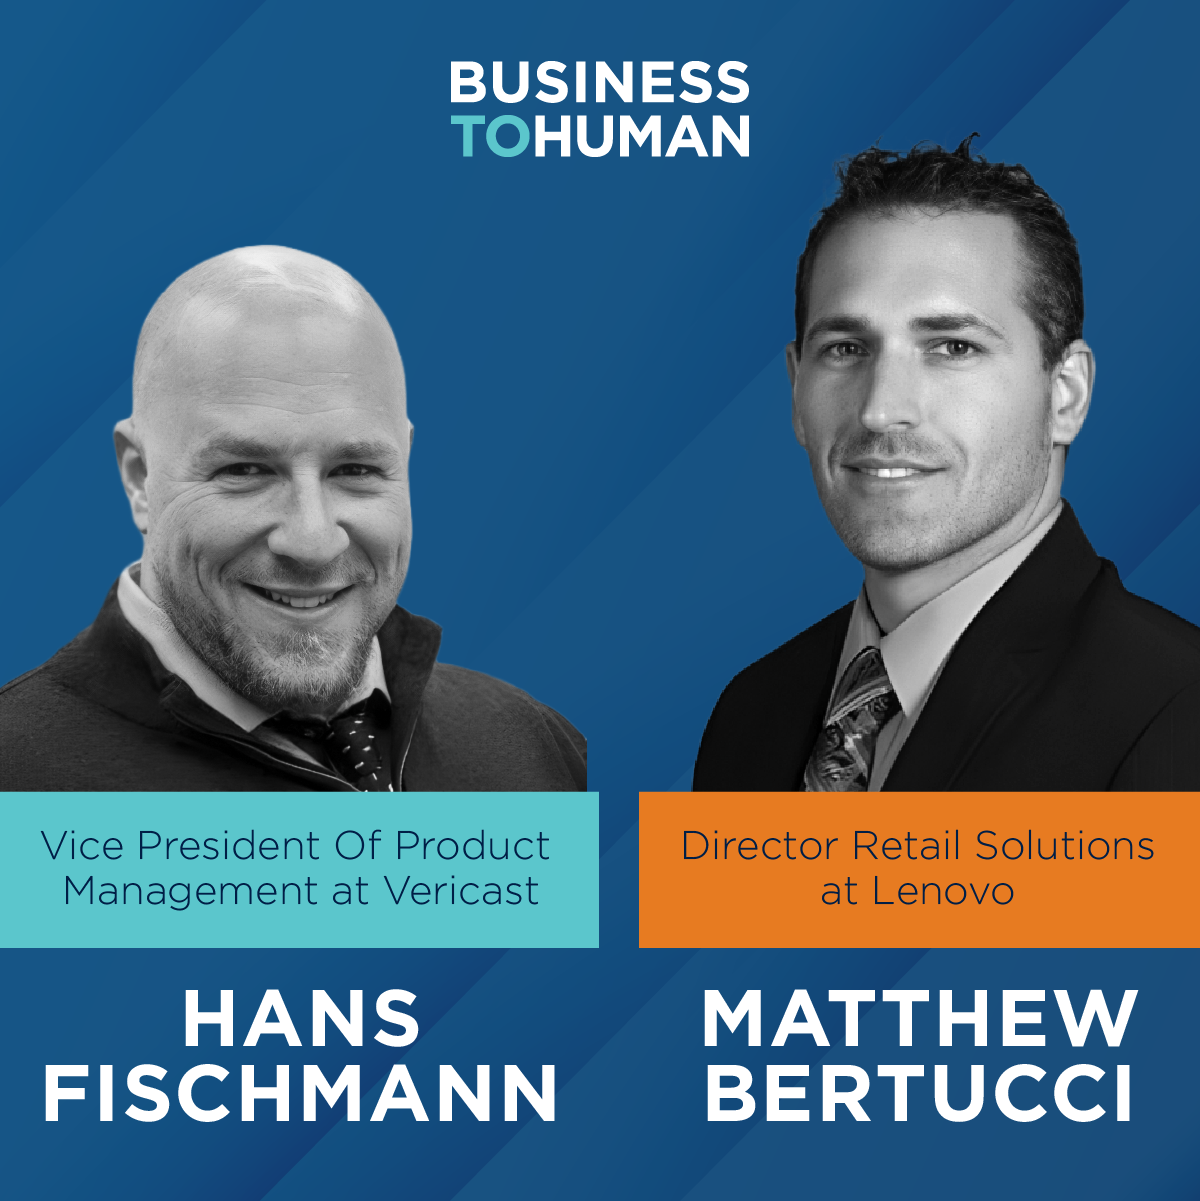 Business to Human with Hans Fischmann and Matthew Bertucci